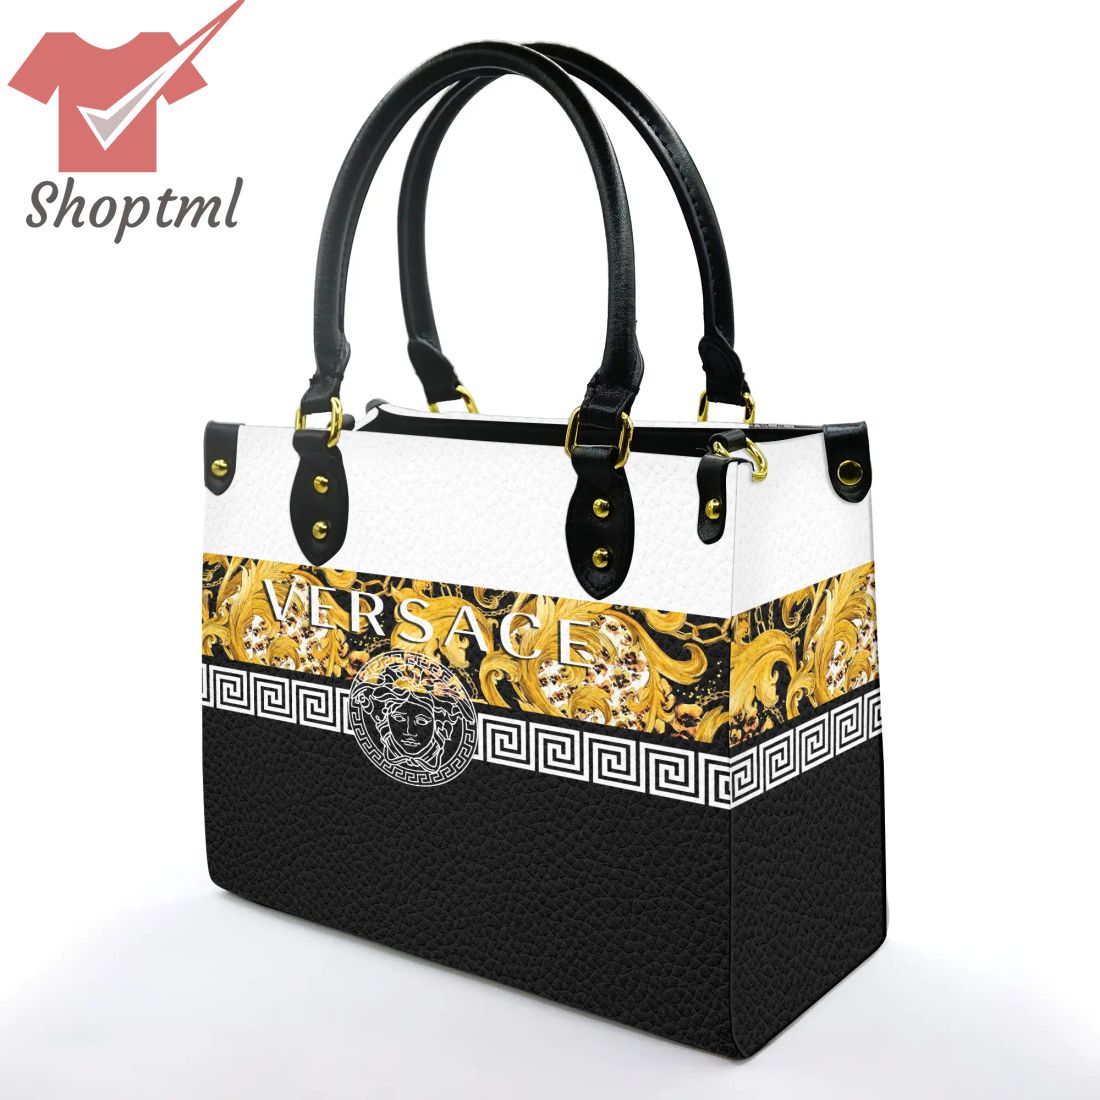 Versace x Fendi Pattern Luxury Leather Handbag